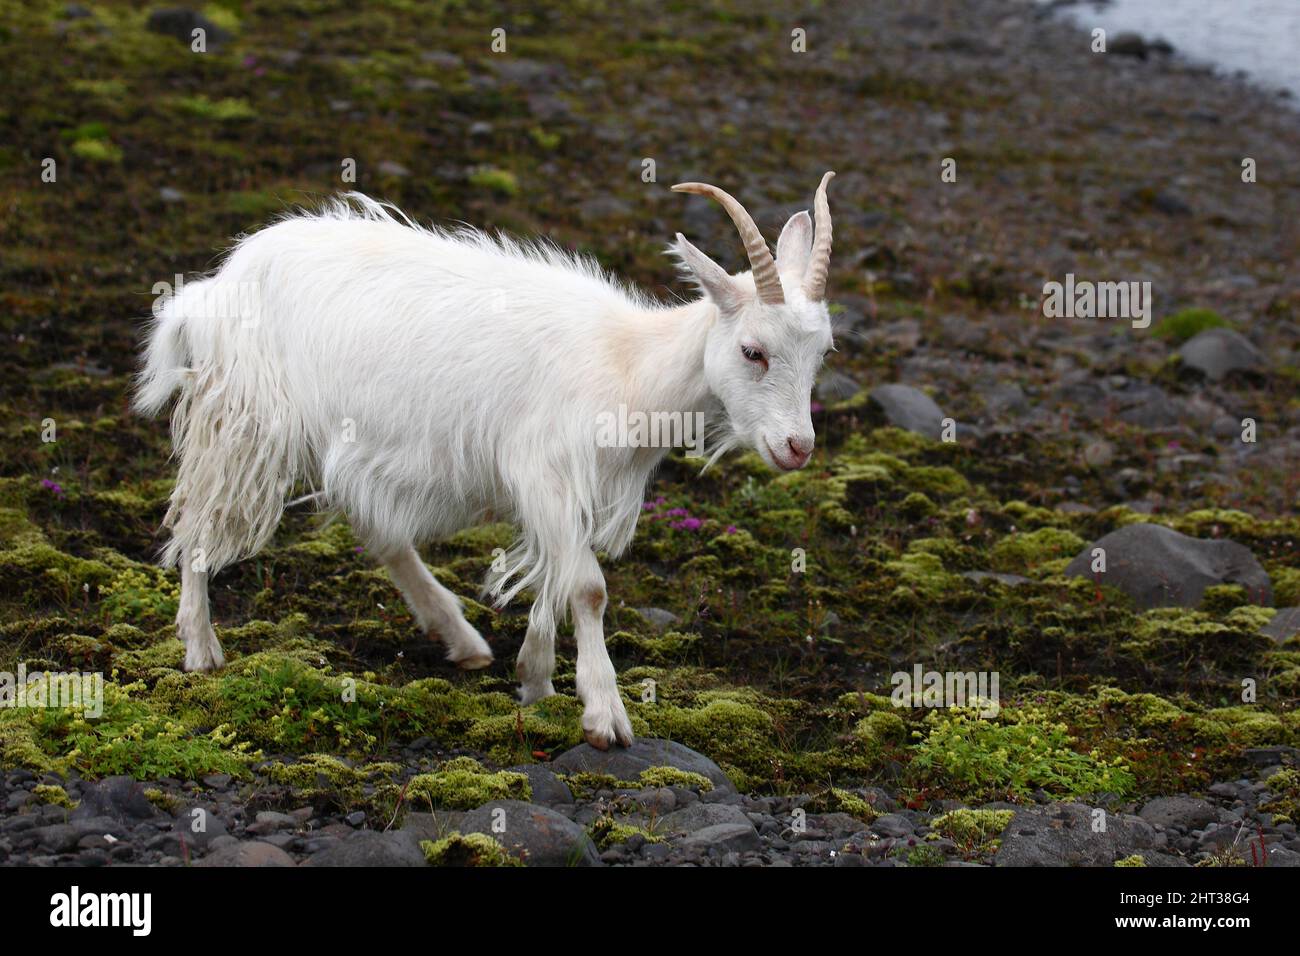 Islandziege / Icelandic goat / Capra hircus Stock Photo